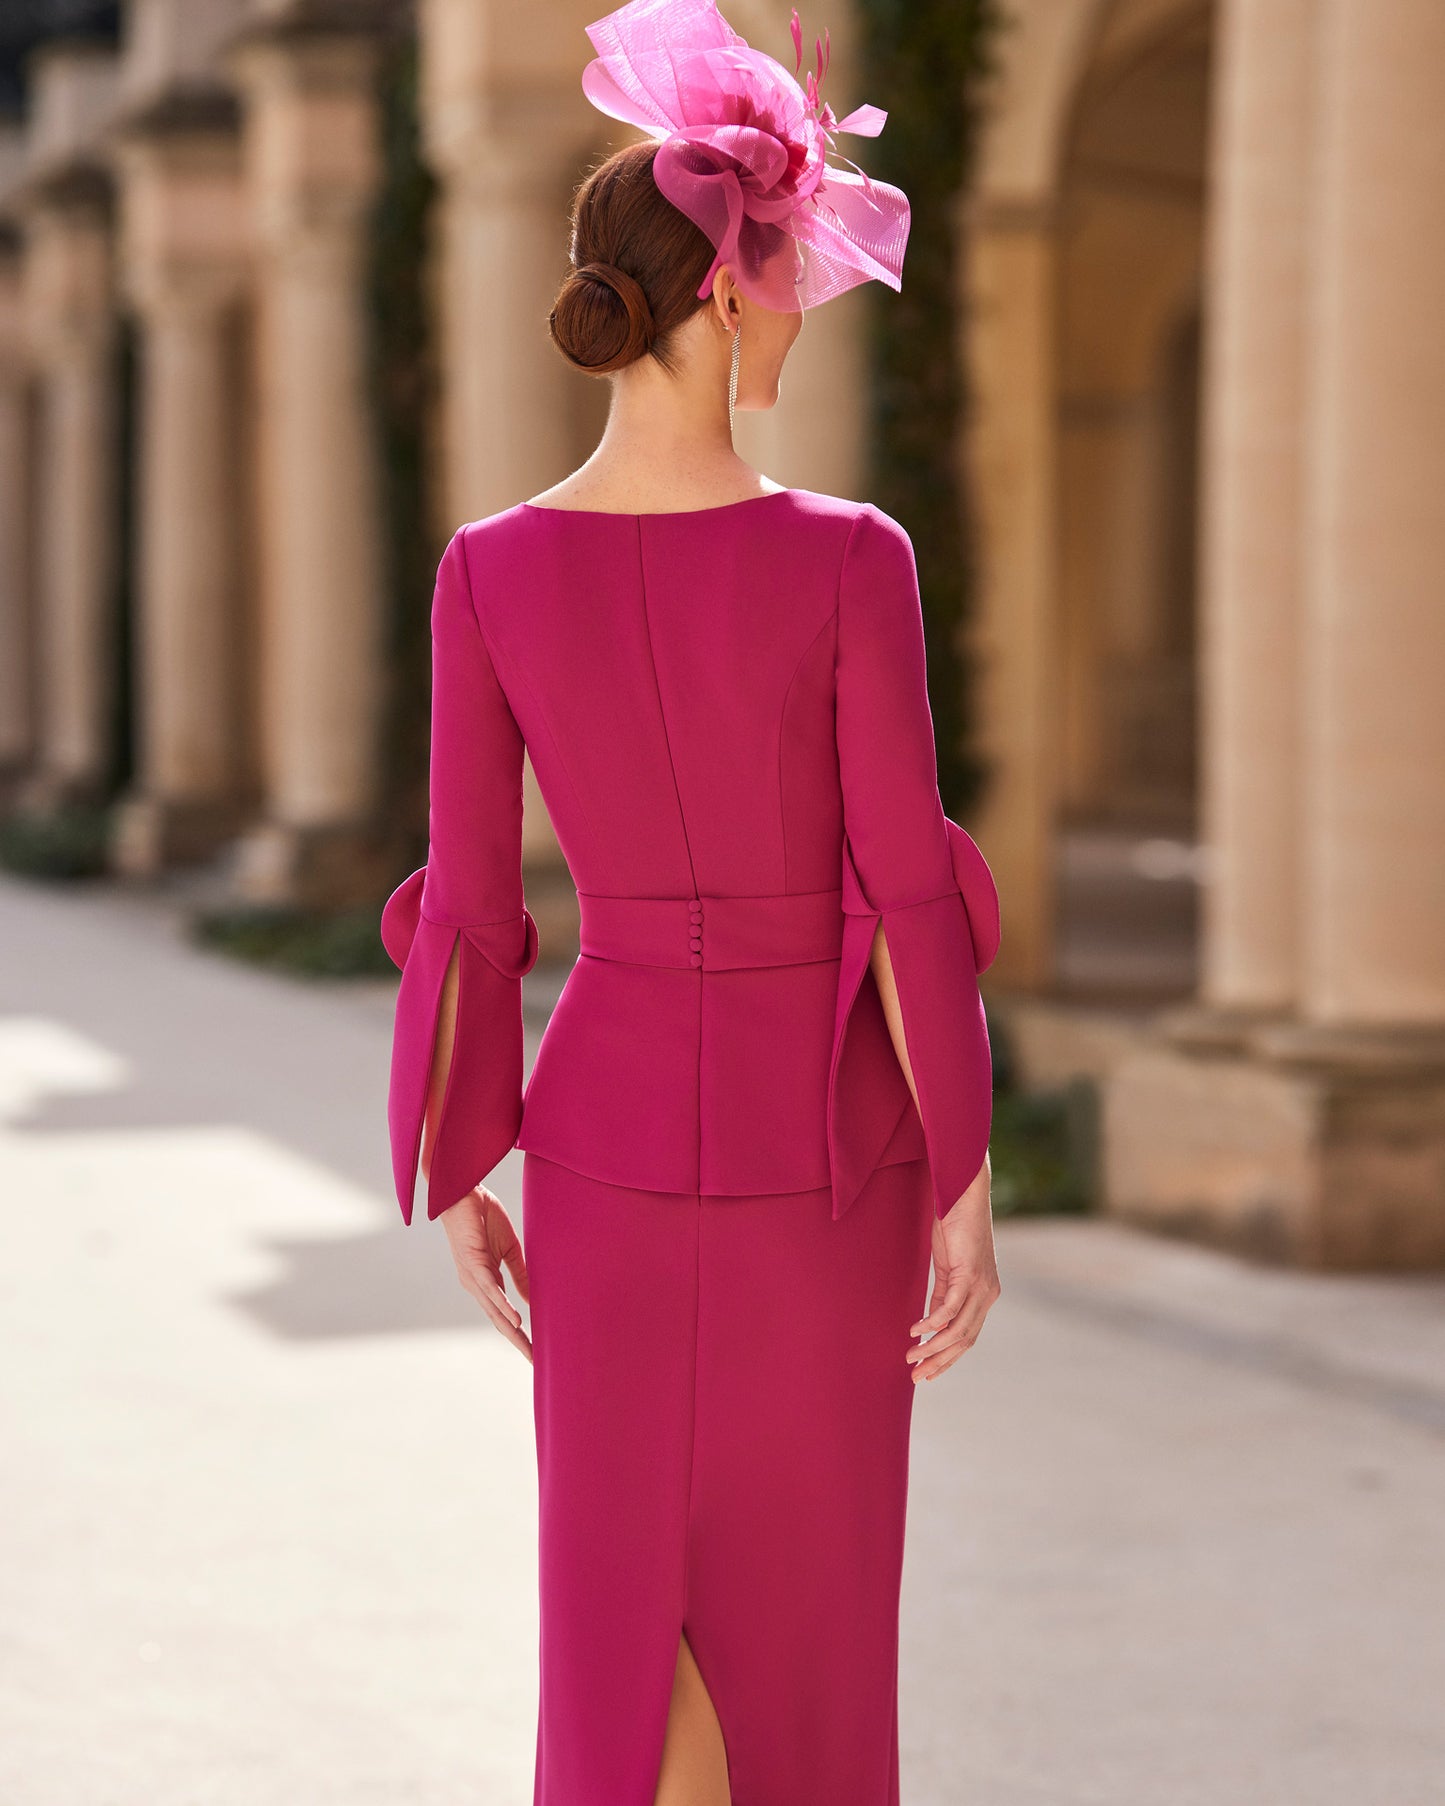 Pink knee-length dress